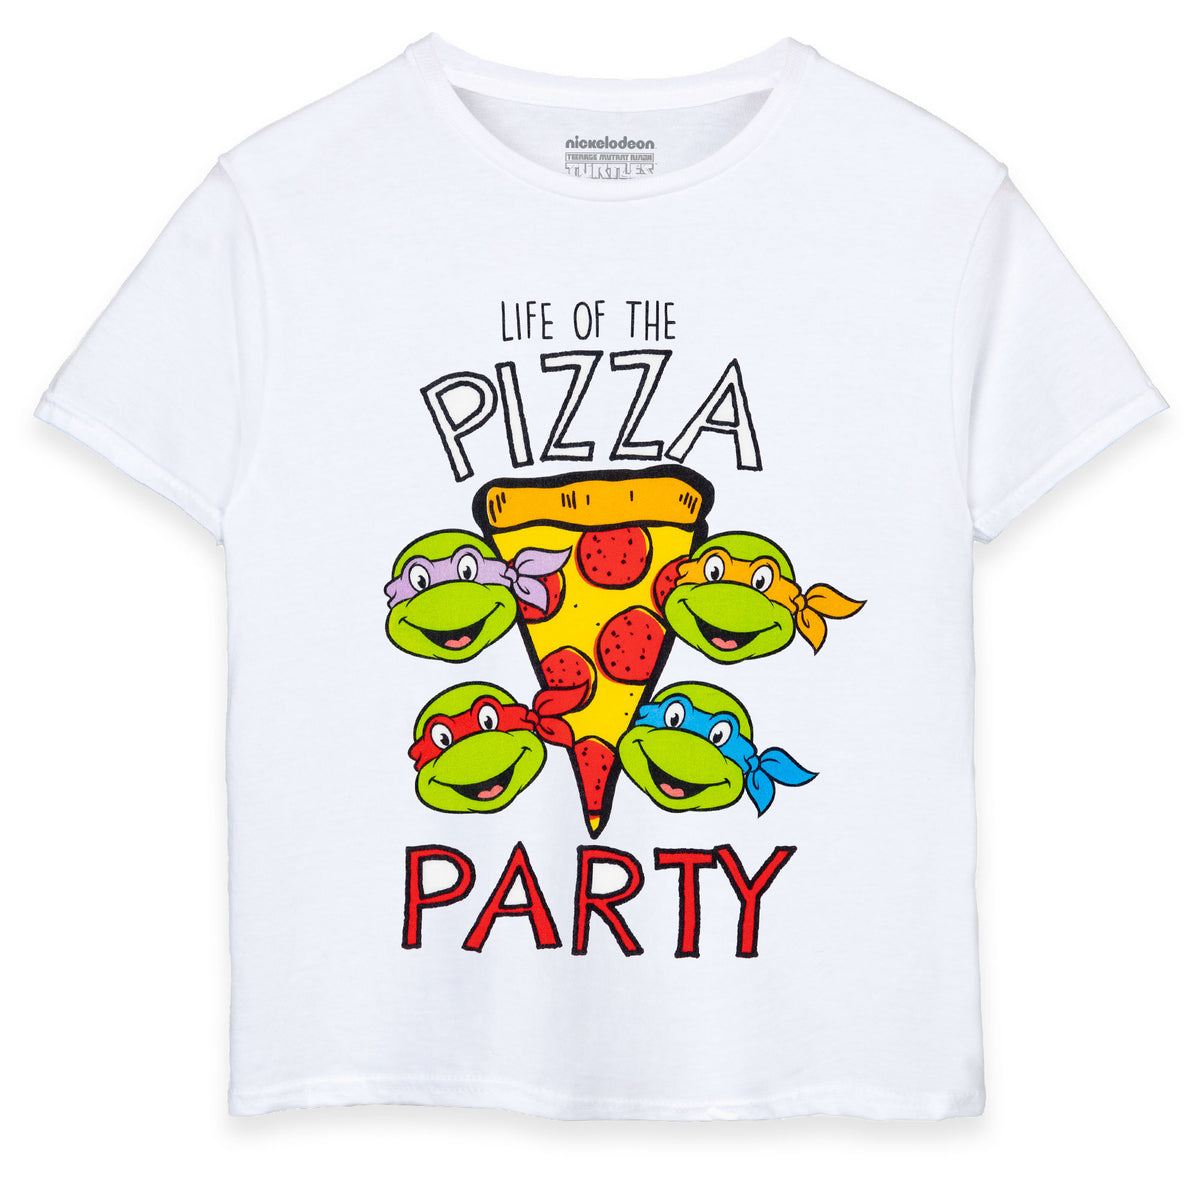 T-shirt Tortue Ninja - Pizza has ruined my life !